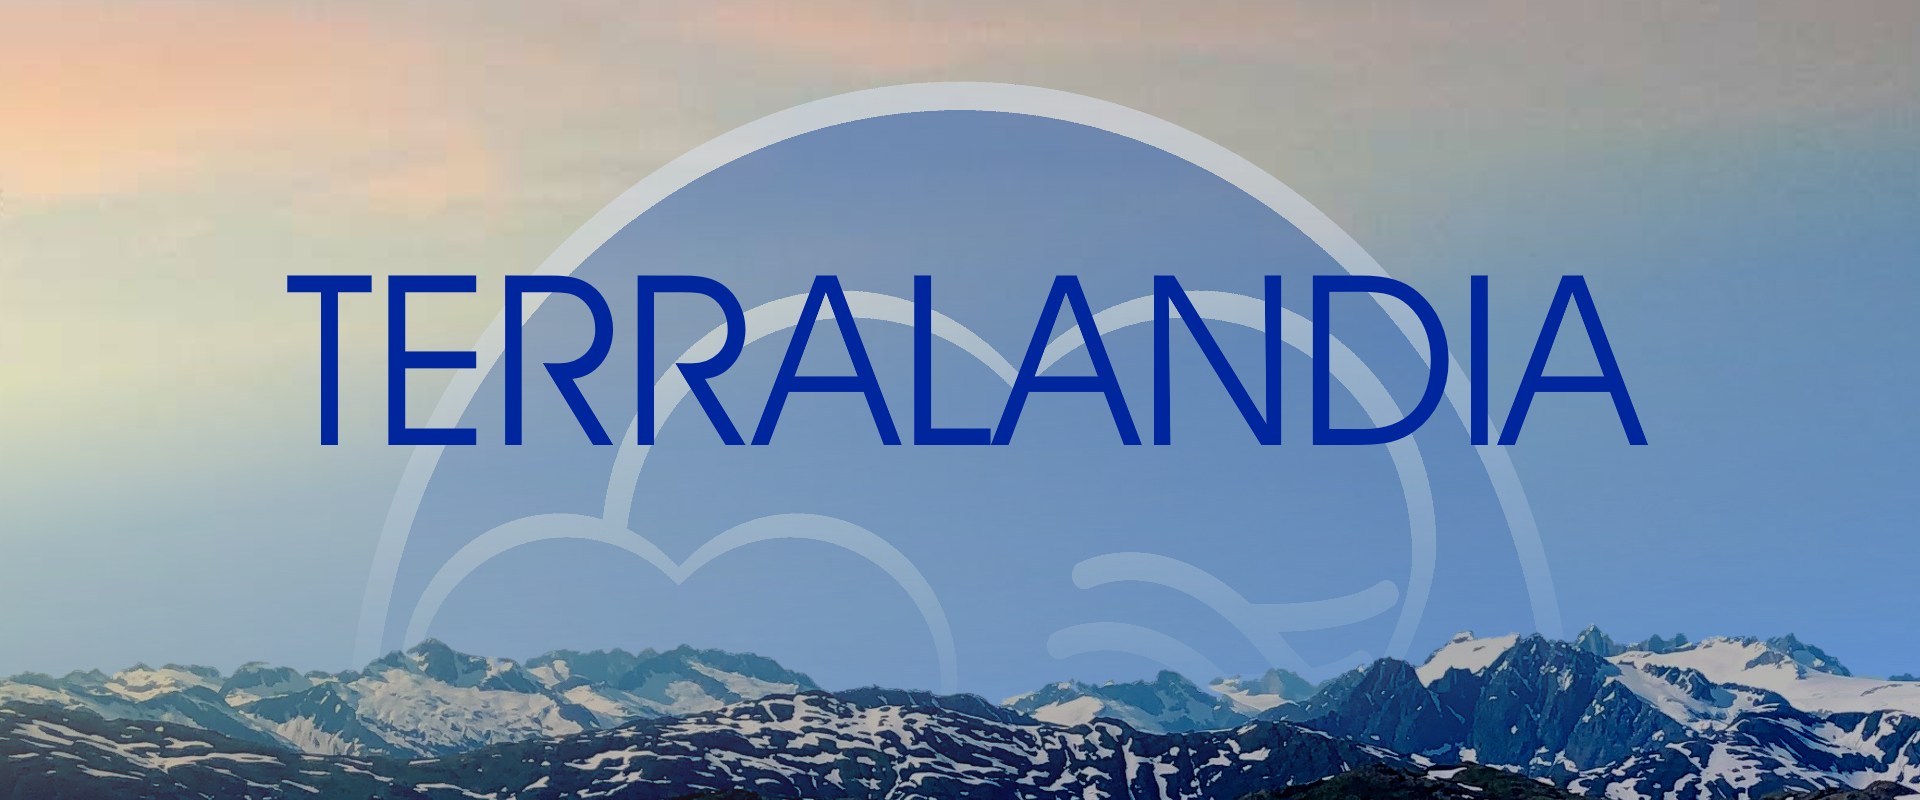 Terralandia - land of Peace